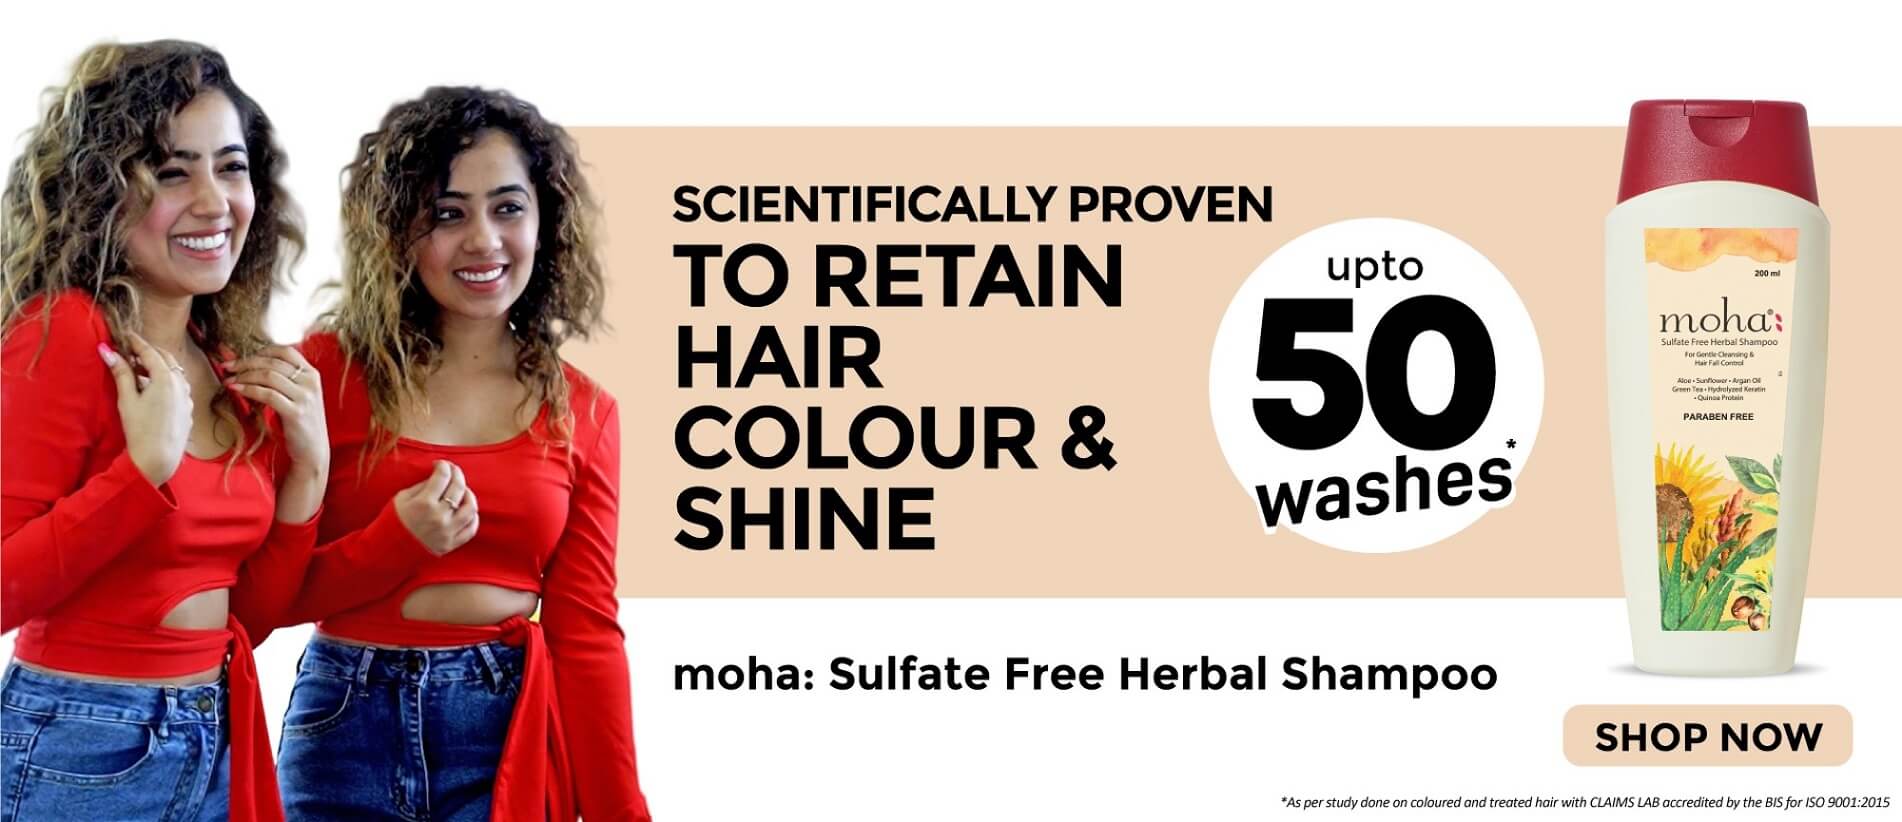 moha: sulfate free herbal shampoo